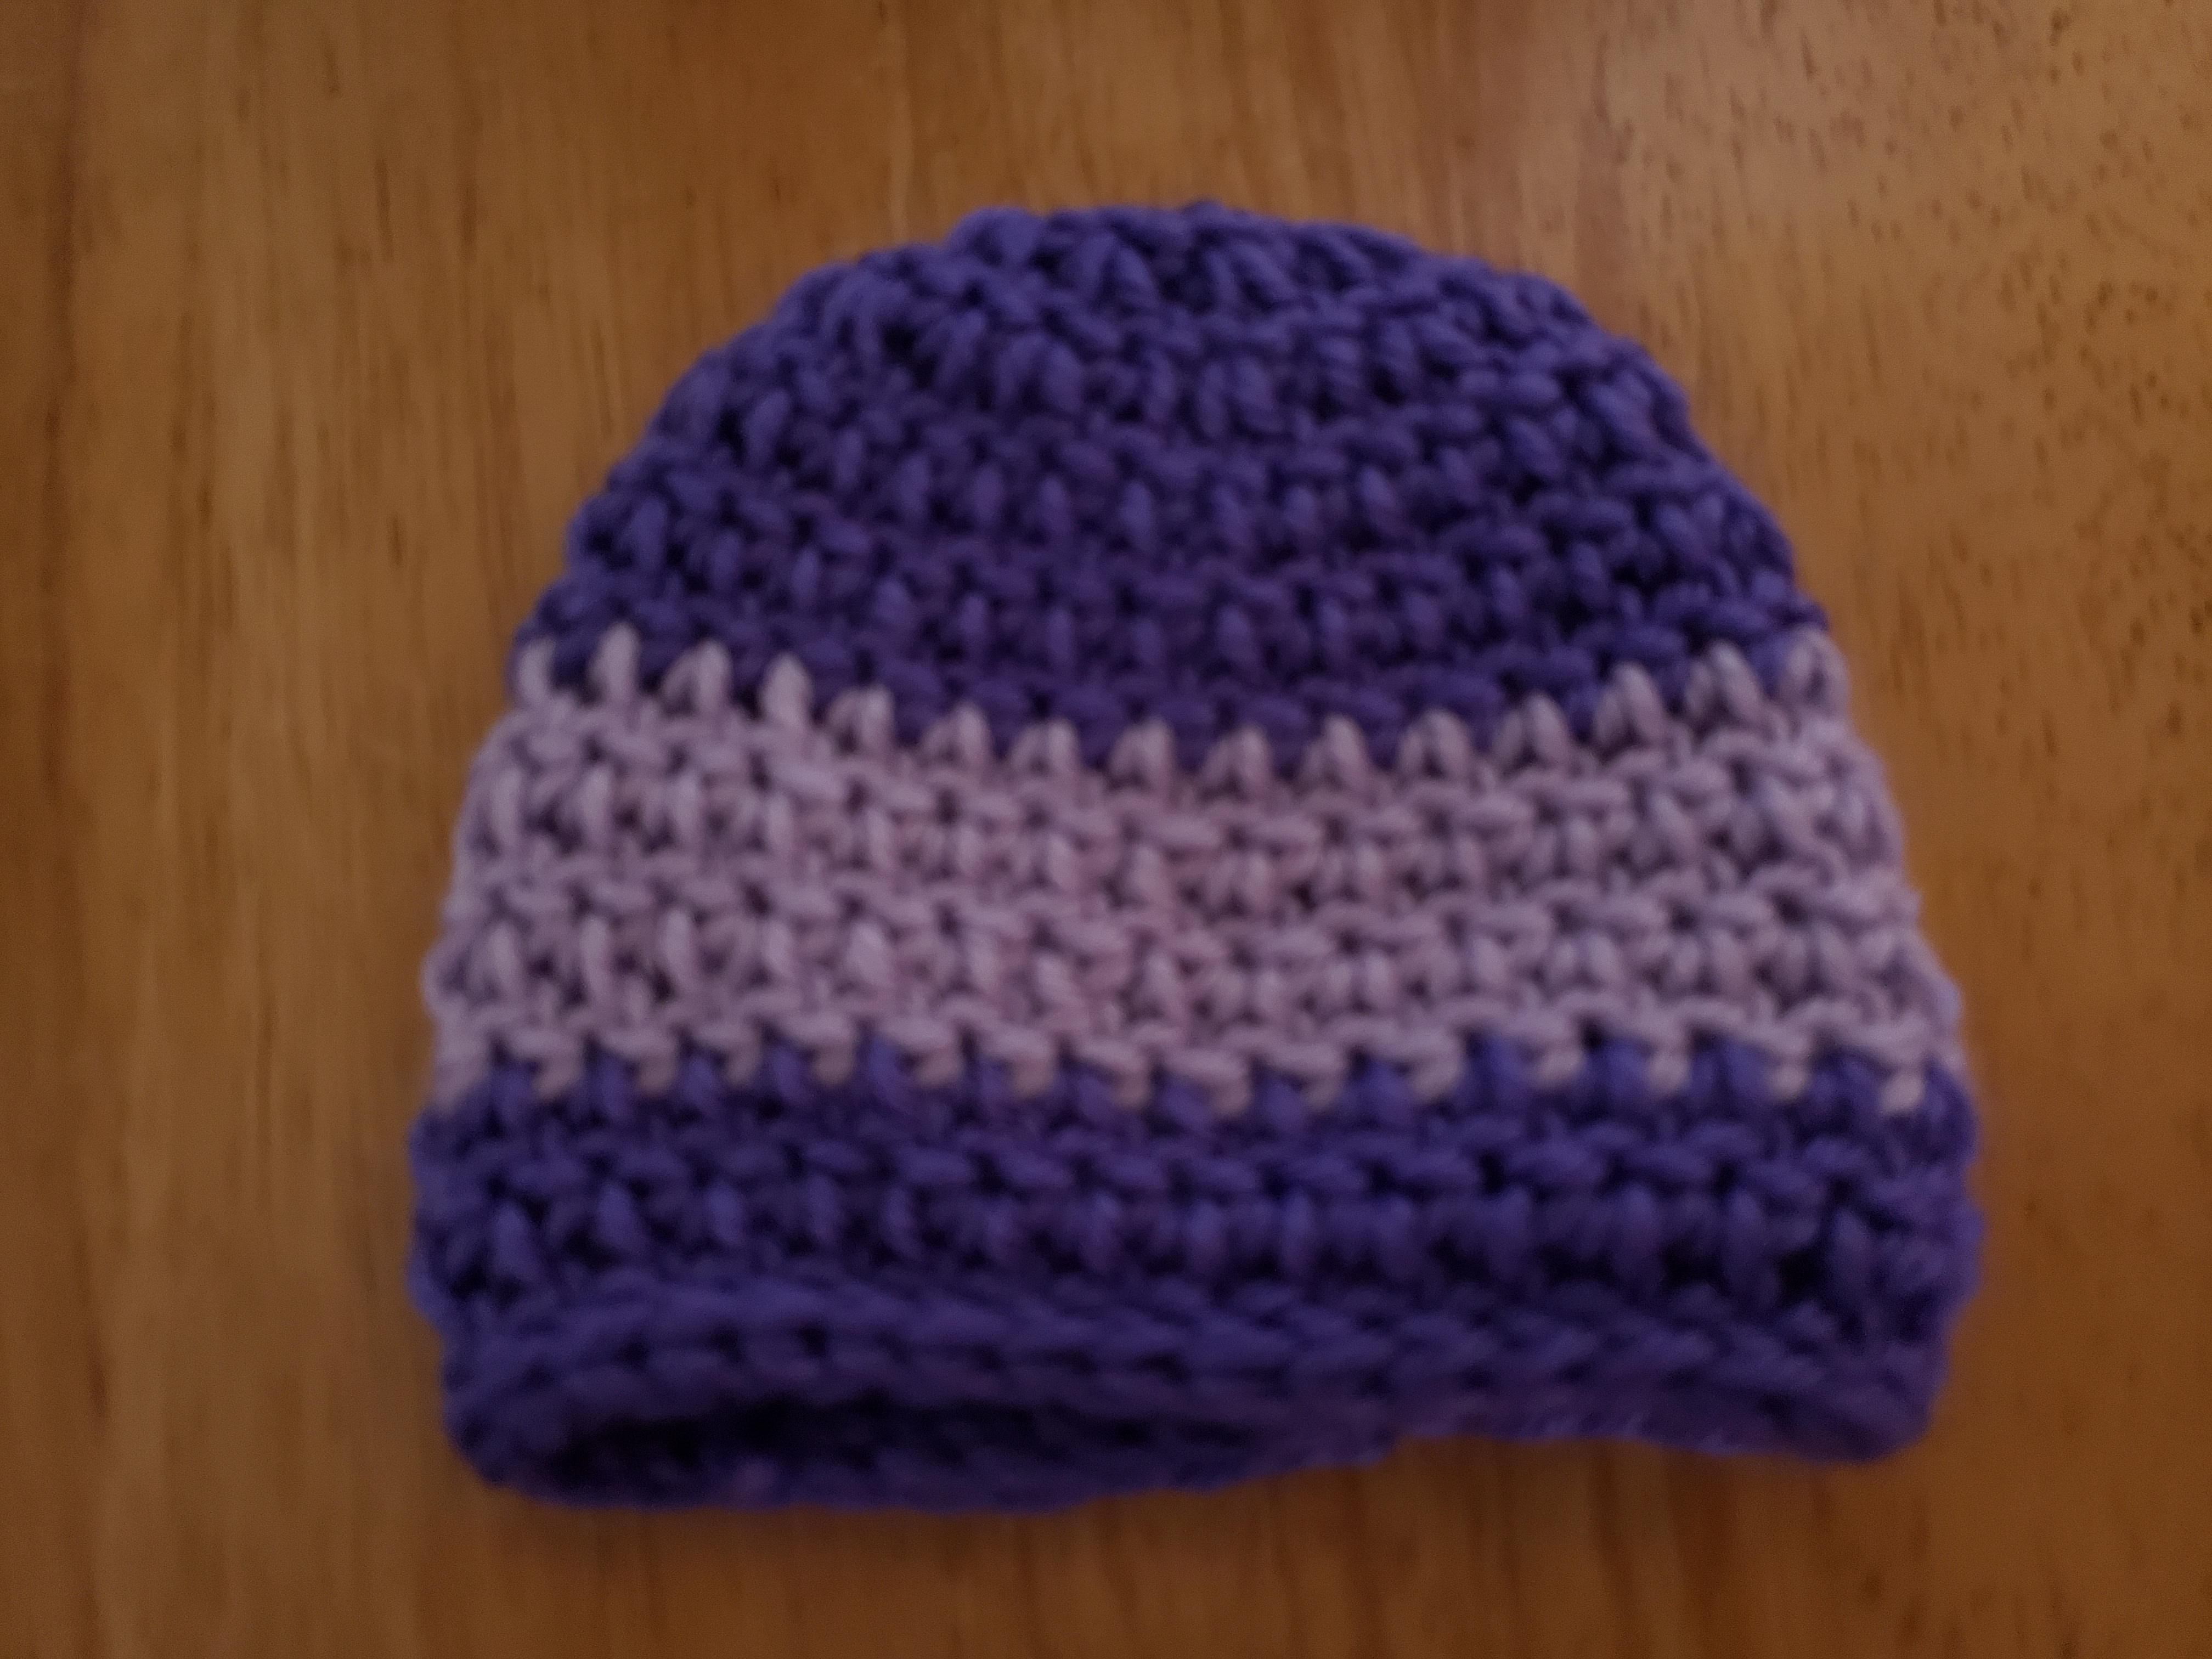 Clothing & Accessories :: Hats :: Winter Hats :: Kids Crochet Hat - Dk  Purple & Lavender Stripe